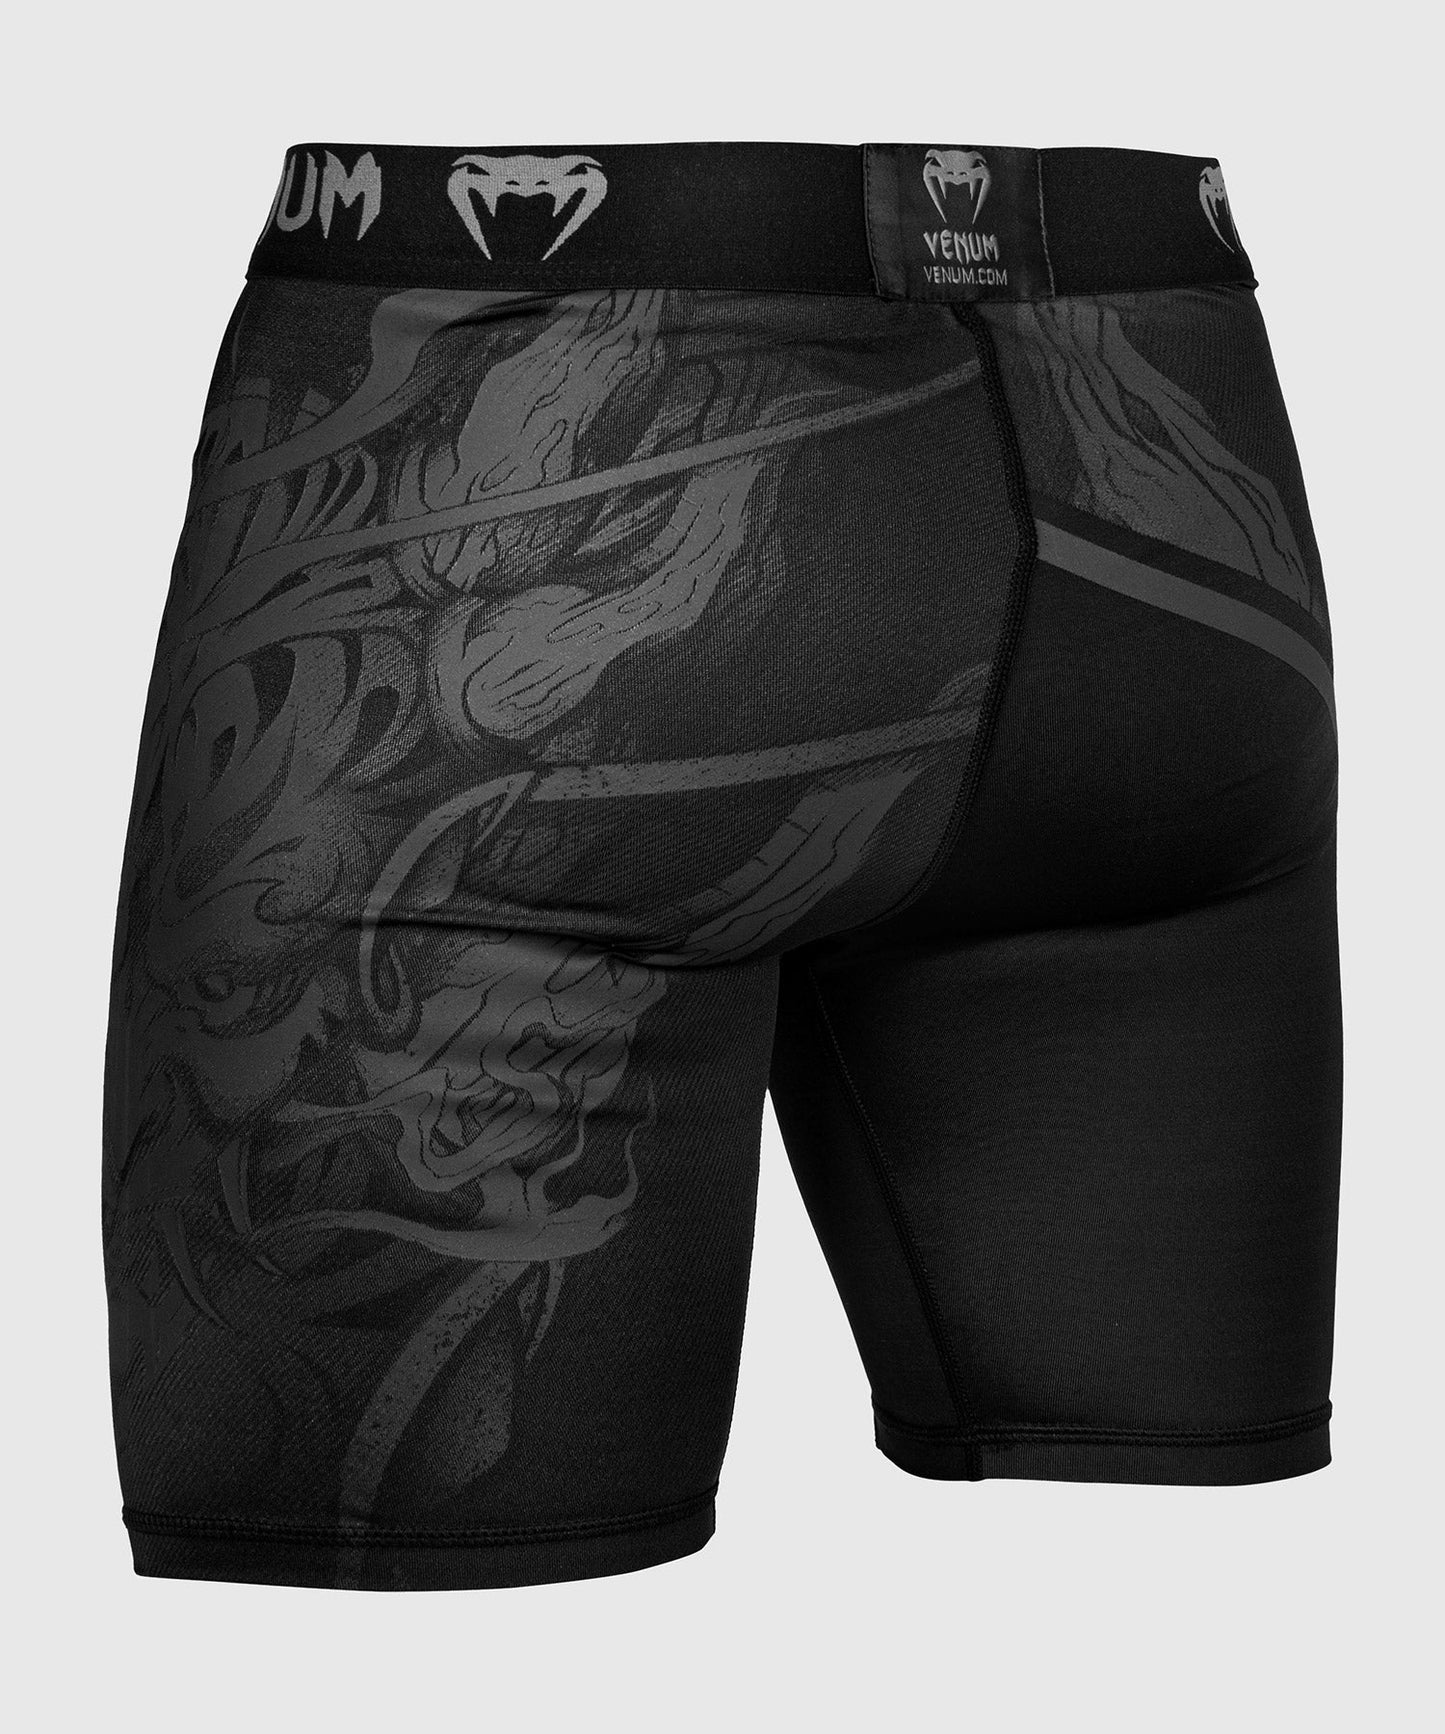 Venum Devil Compression Shorts - Black/Black